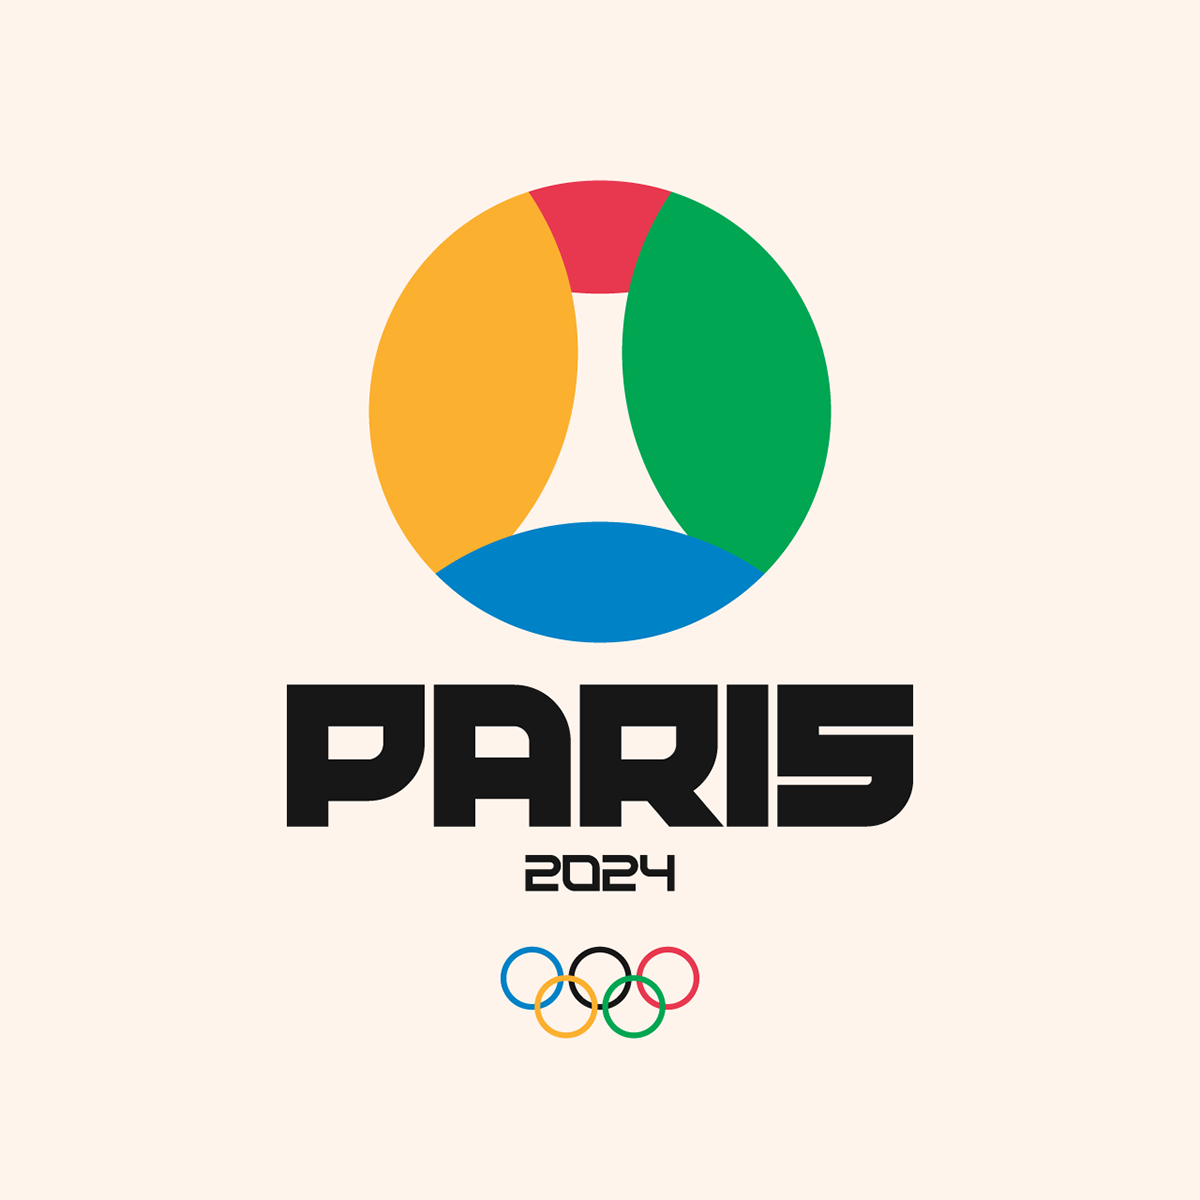 adidas dope ikea Love nyc Paris 2024 paris 2024 olympics playstation spotify windows